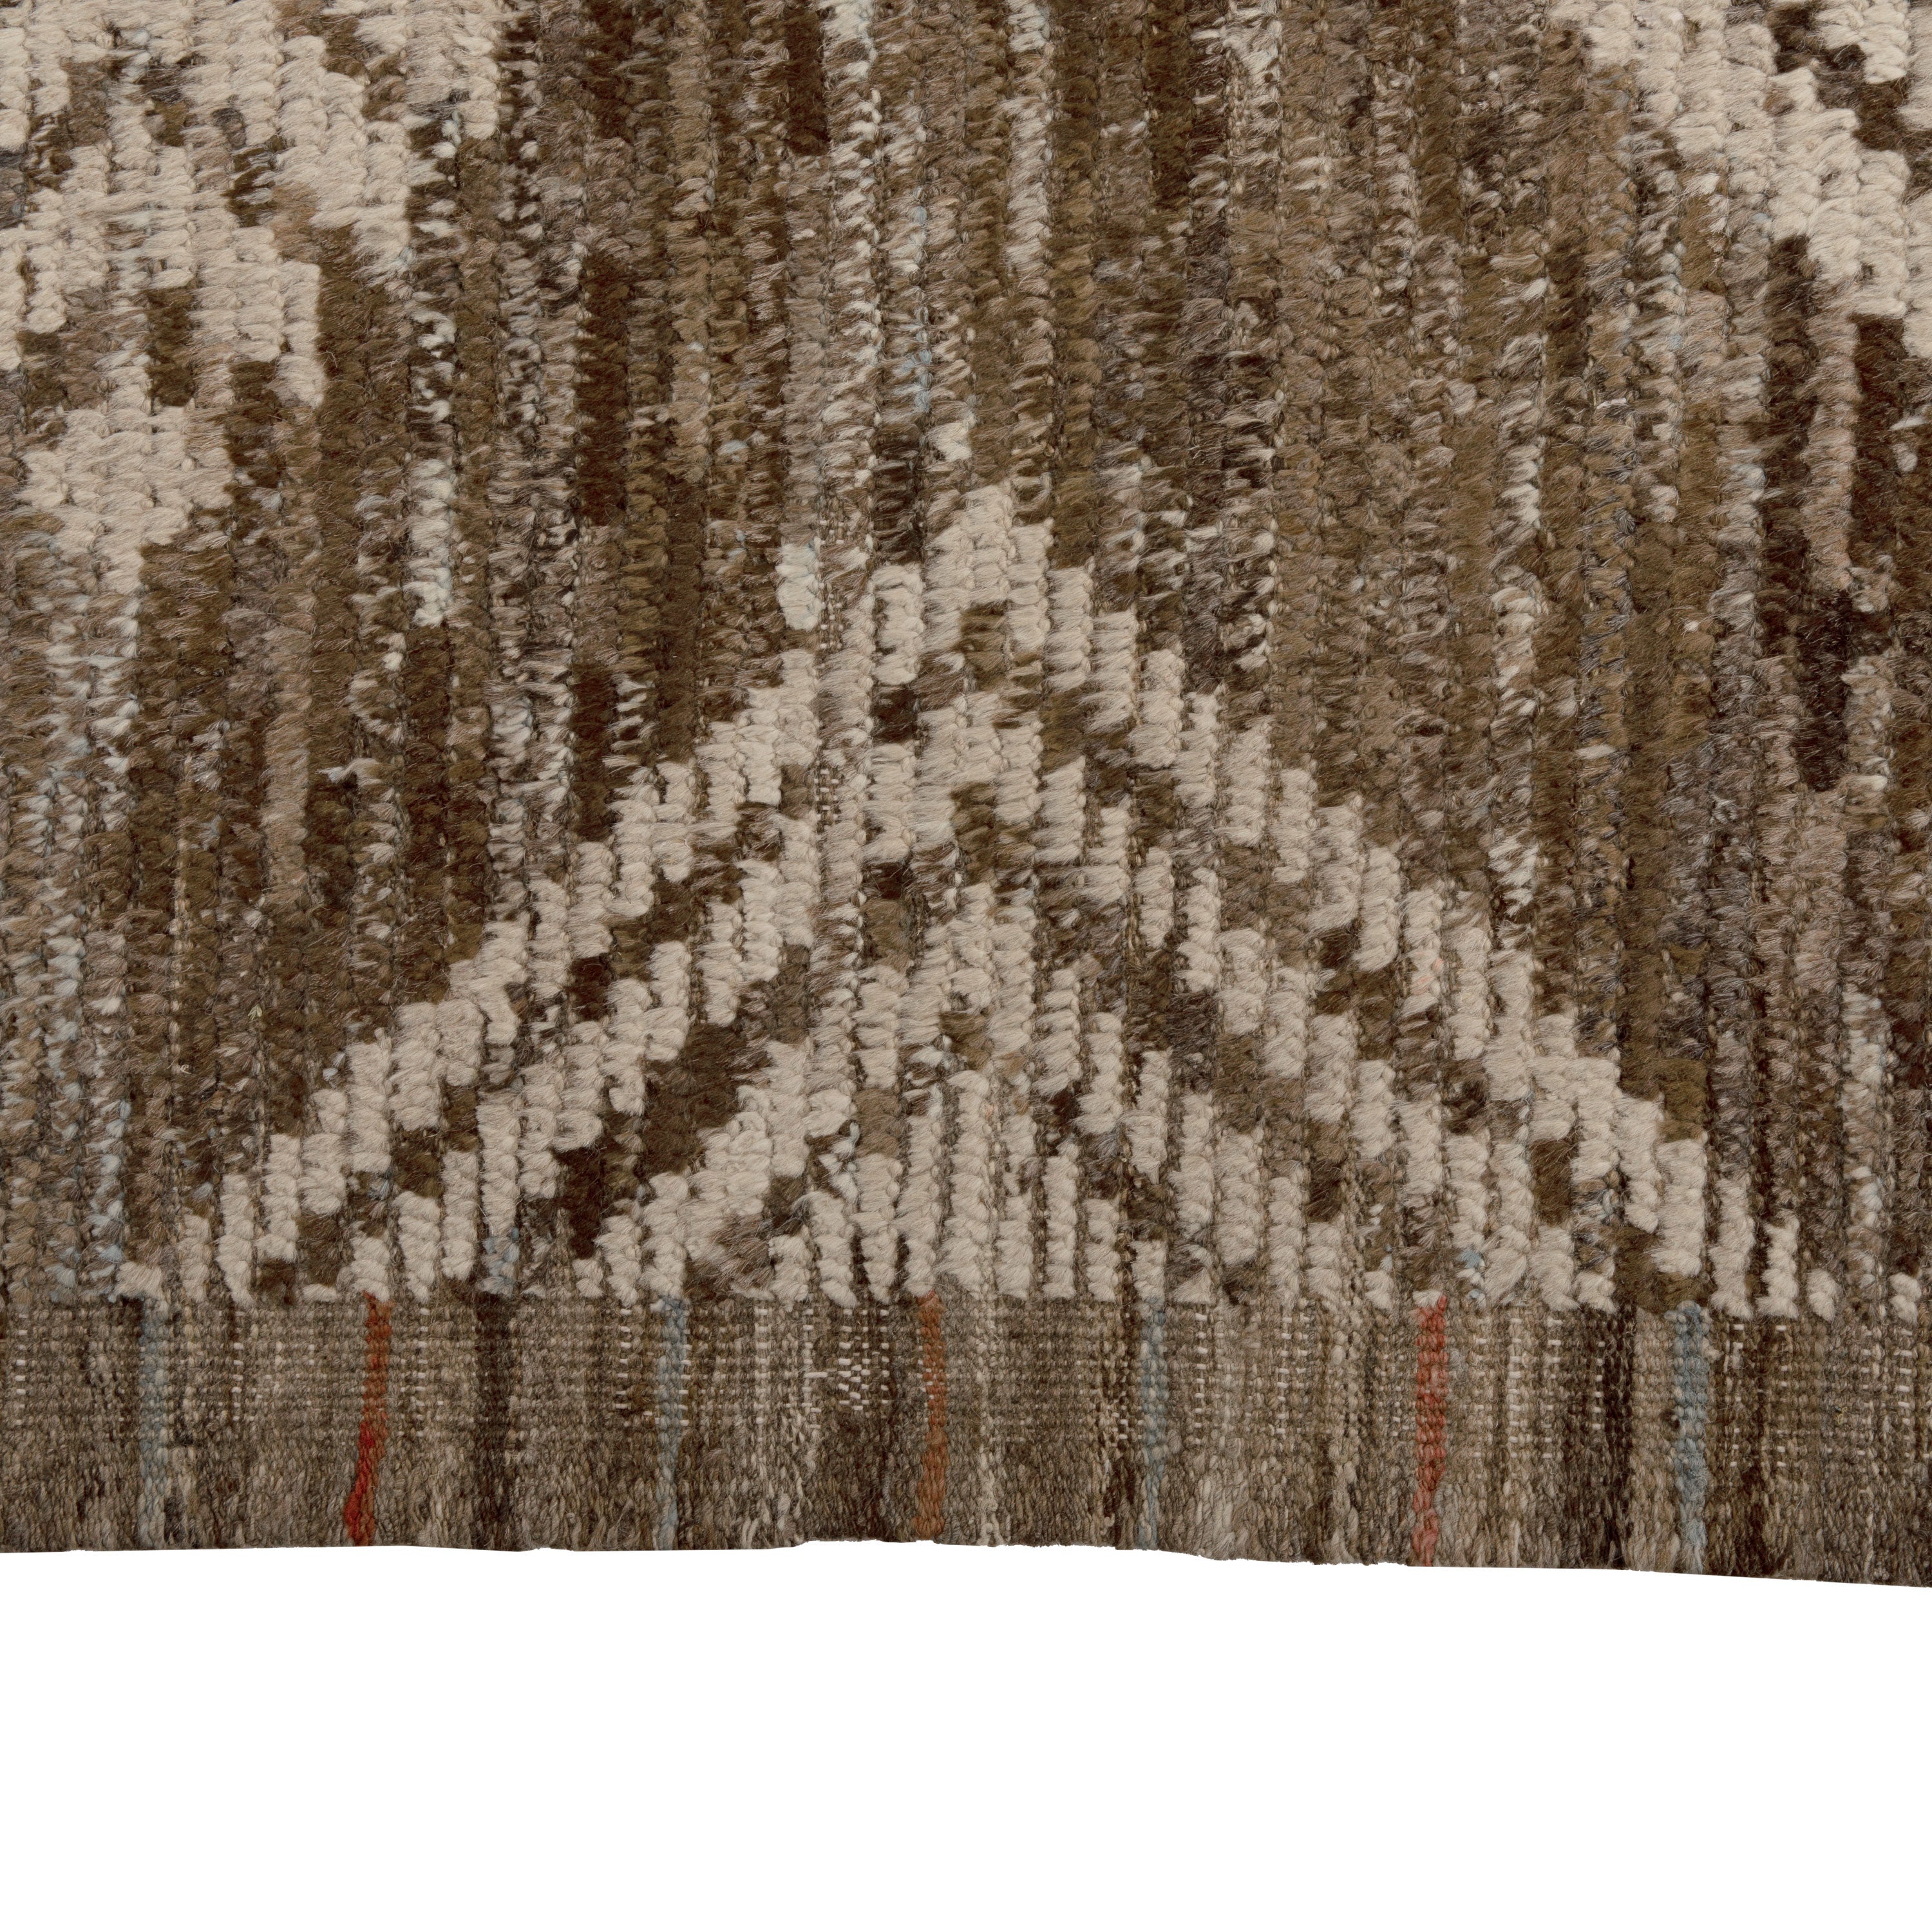 Zameen Patterned Modern Wool Rug - 10' x 14' Default Title